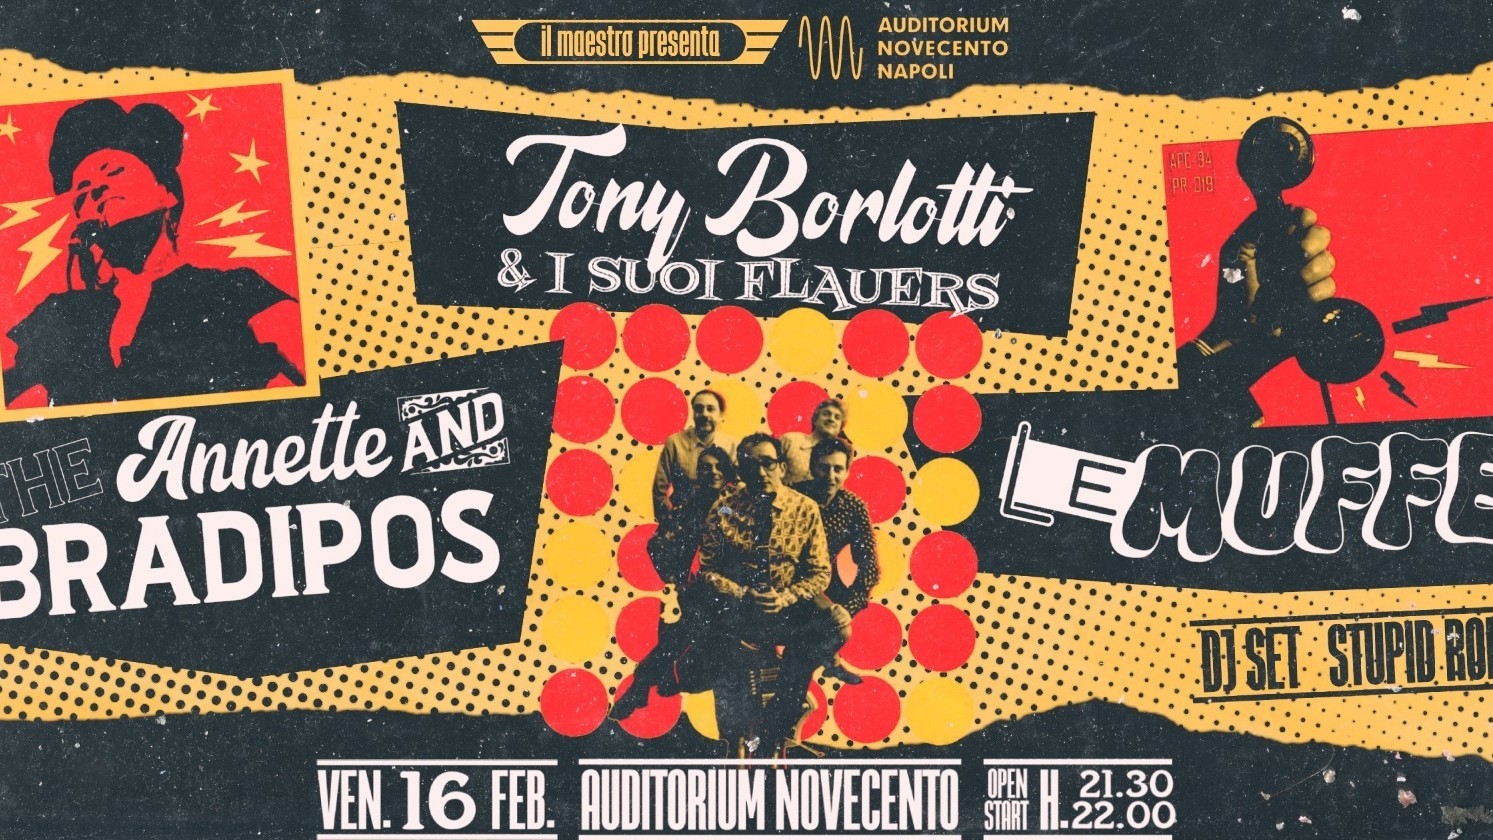 Tony Borlotti e i suoi Flauers - The Annette and the Bradipos - Le Muffe - Djset Music Robot